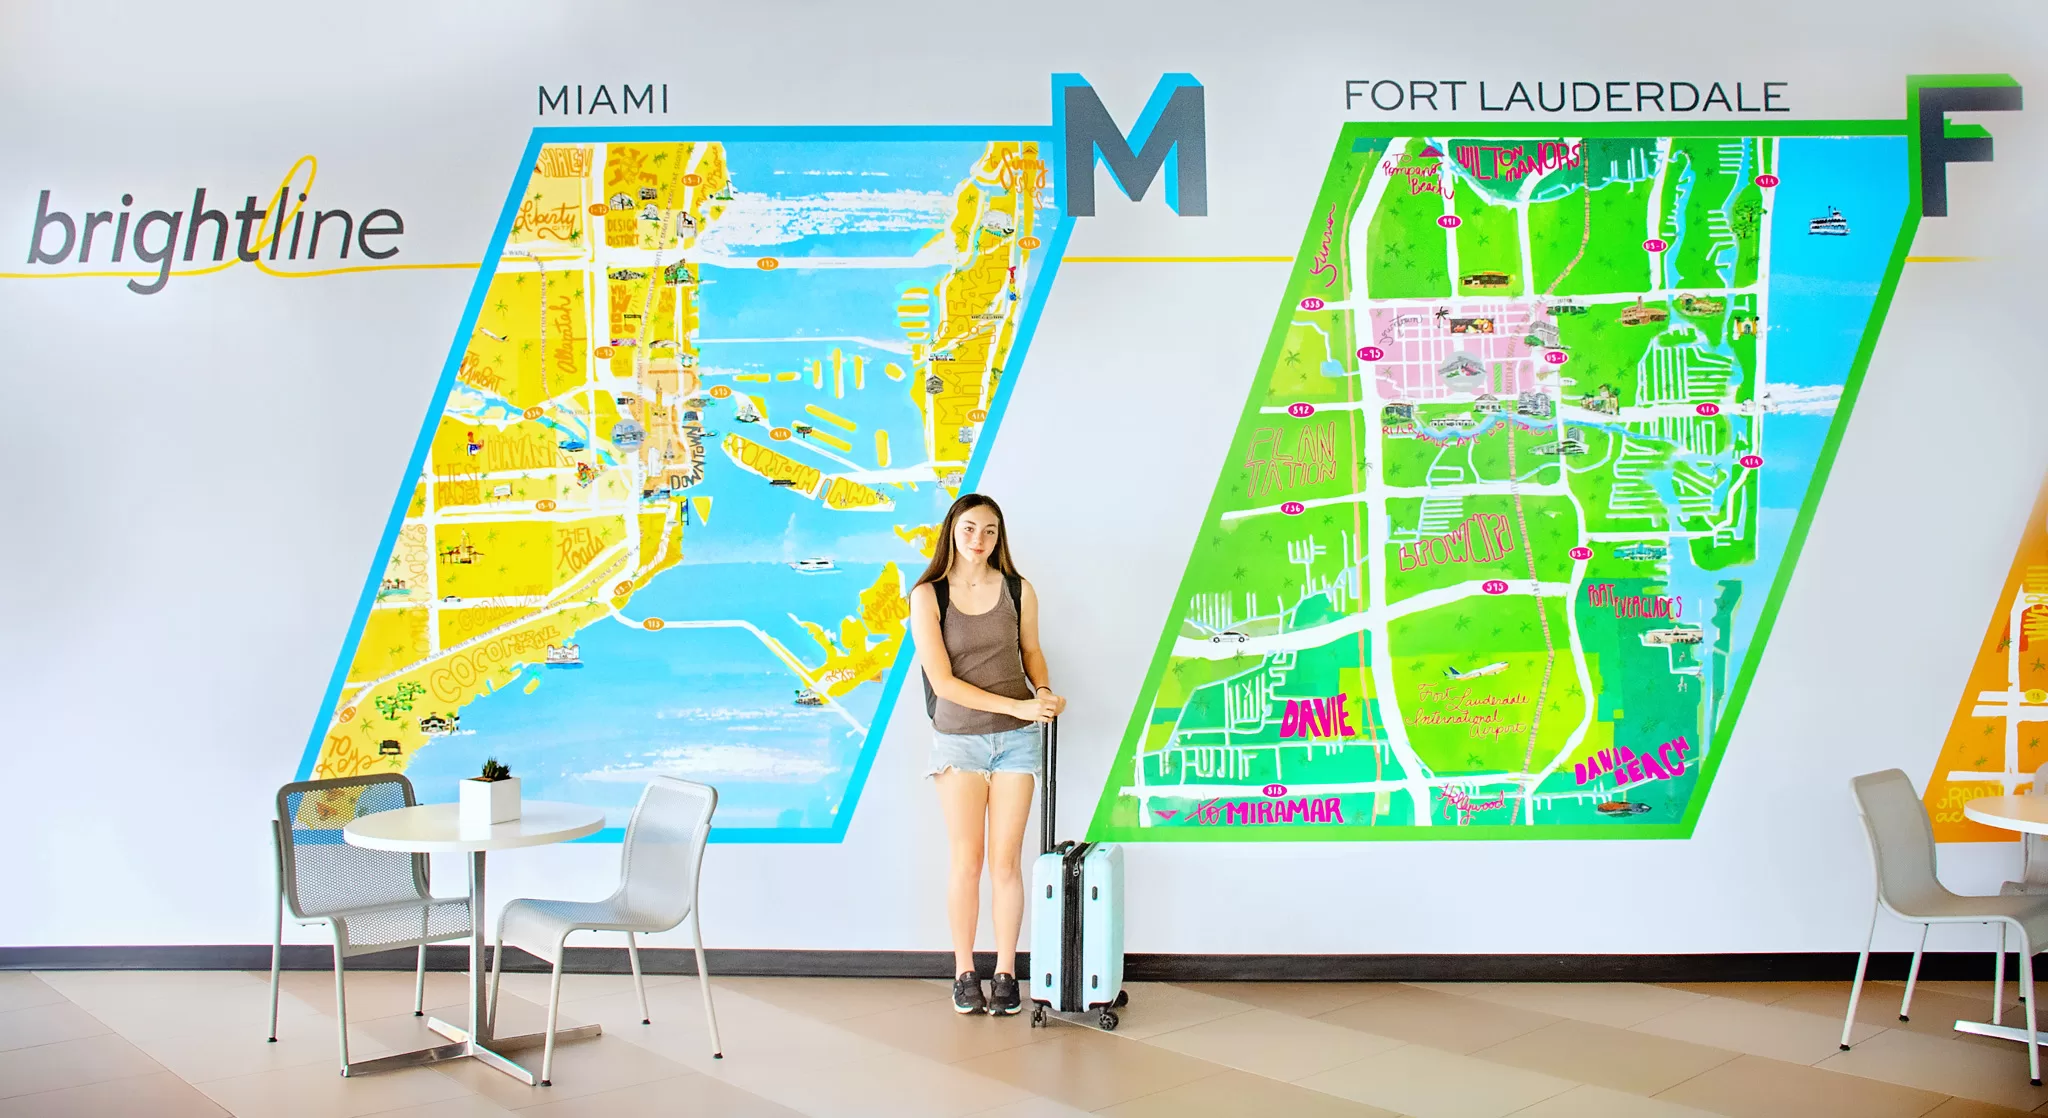 Premium Rideshare Service Parks Itself In Miami